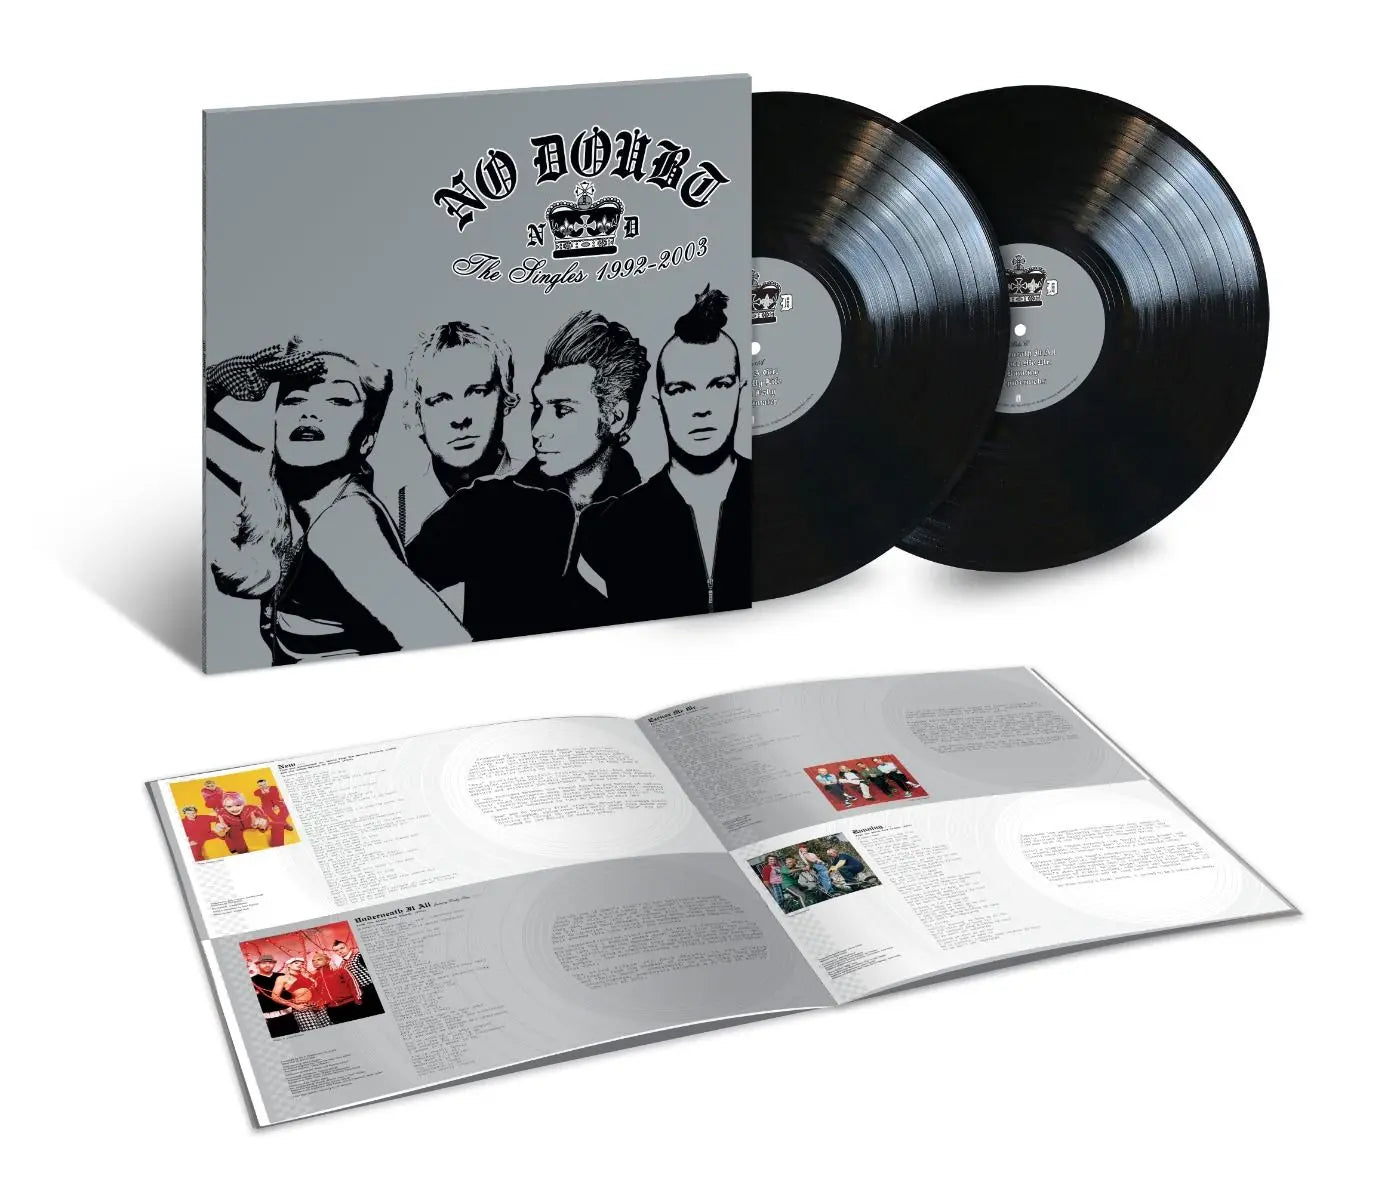 No Doubt - The Singles 1992-2003 [180 Gram Vinyl]